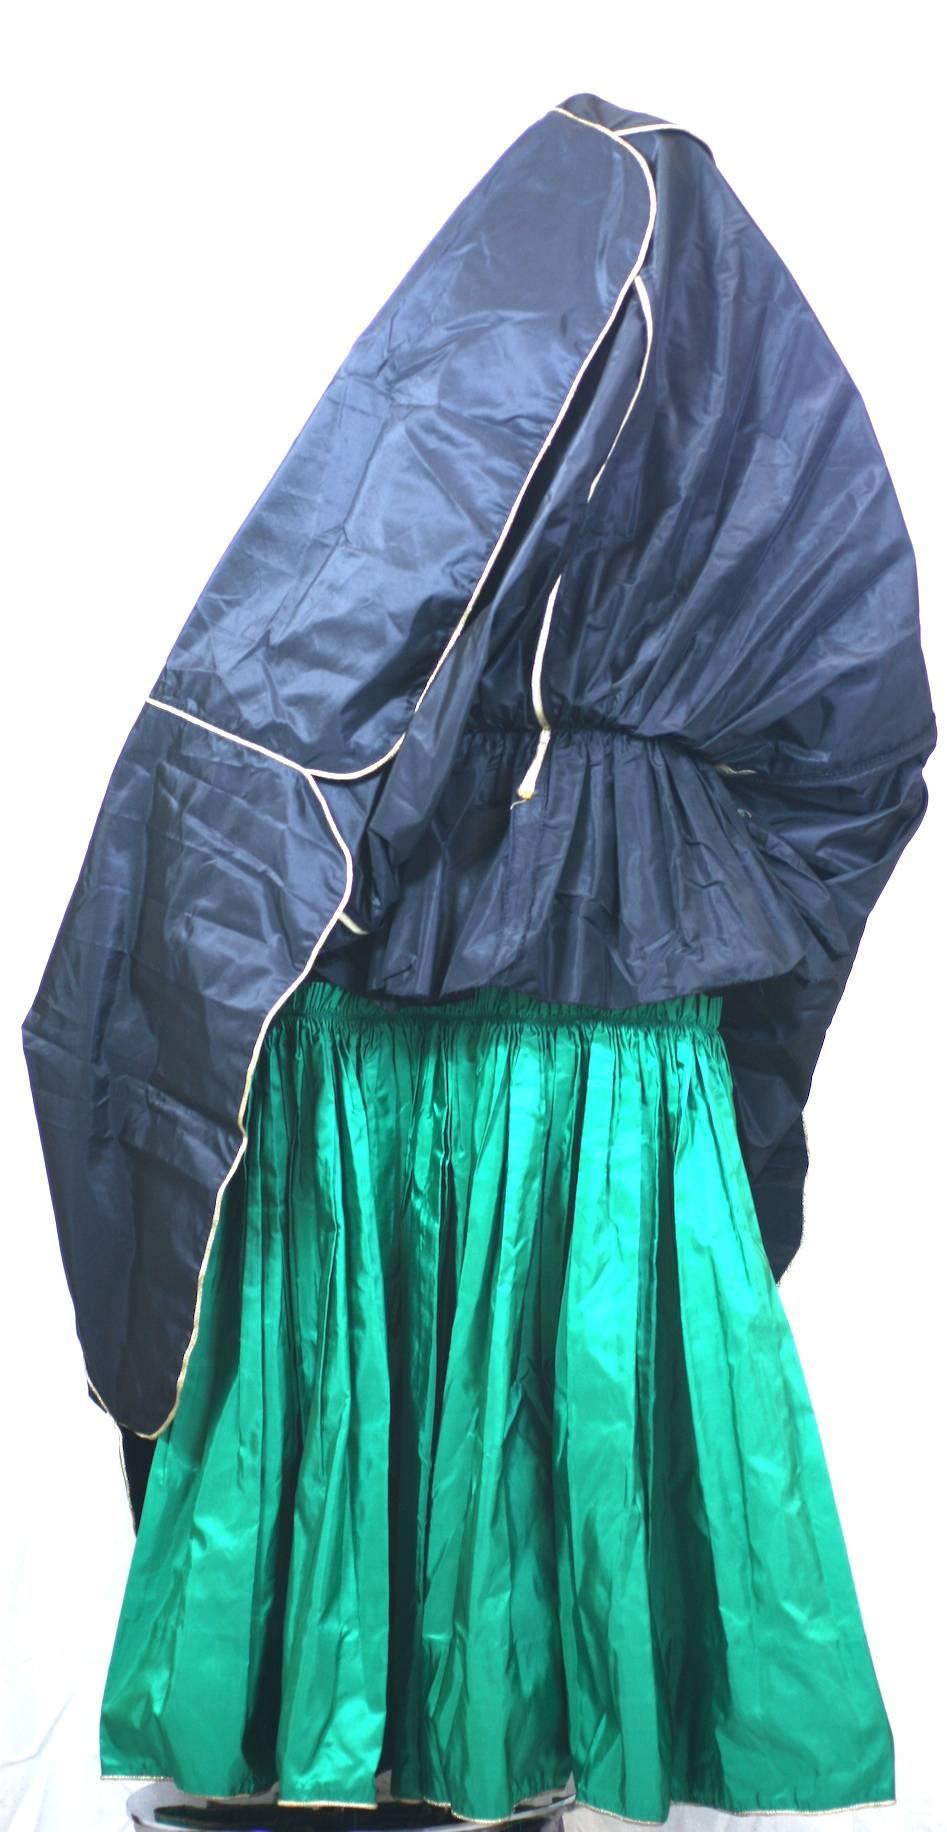 Yves Saint Laurent Rive Gauche Russian Collection Evening Skirt, 1976-1977 1